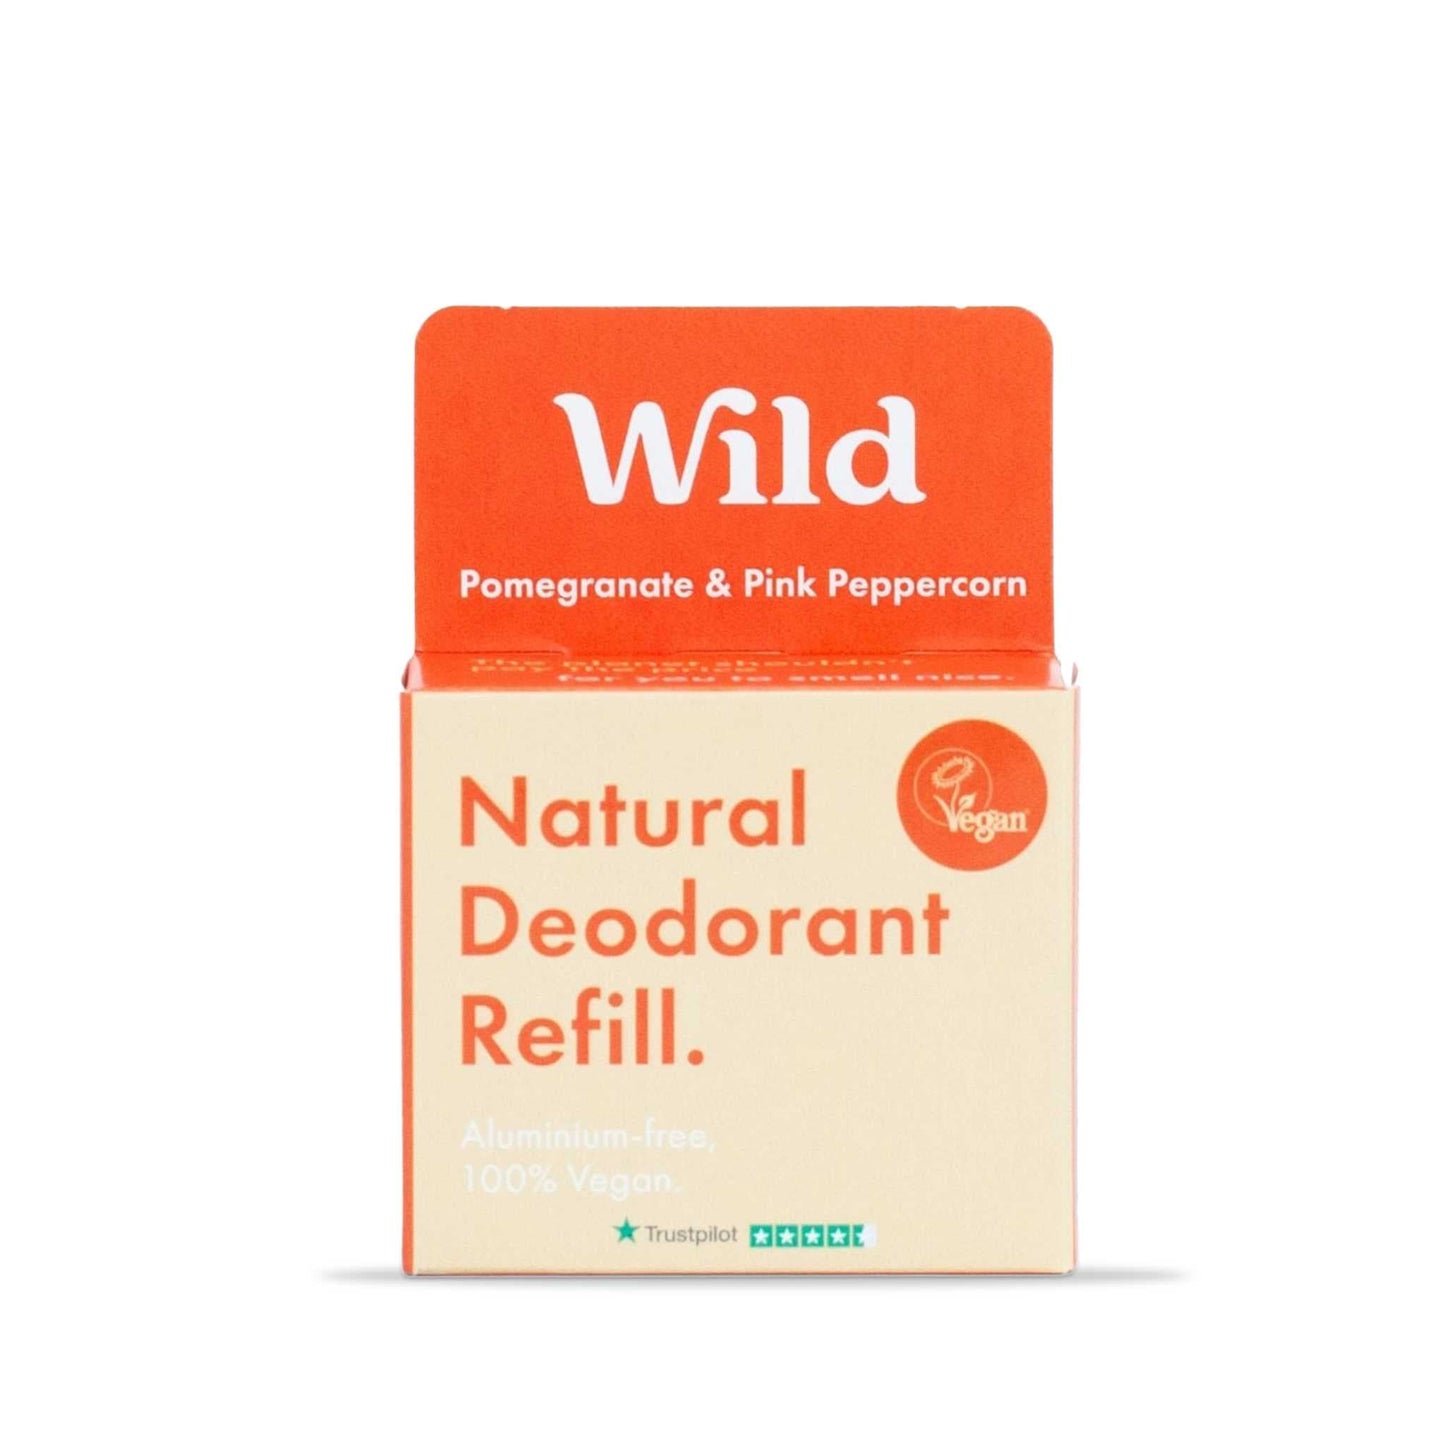 Wild Deodorant Wild Natural Deodorant Refill - Pomegranate & Pink Peppercorn